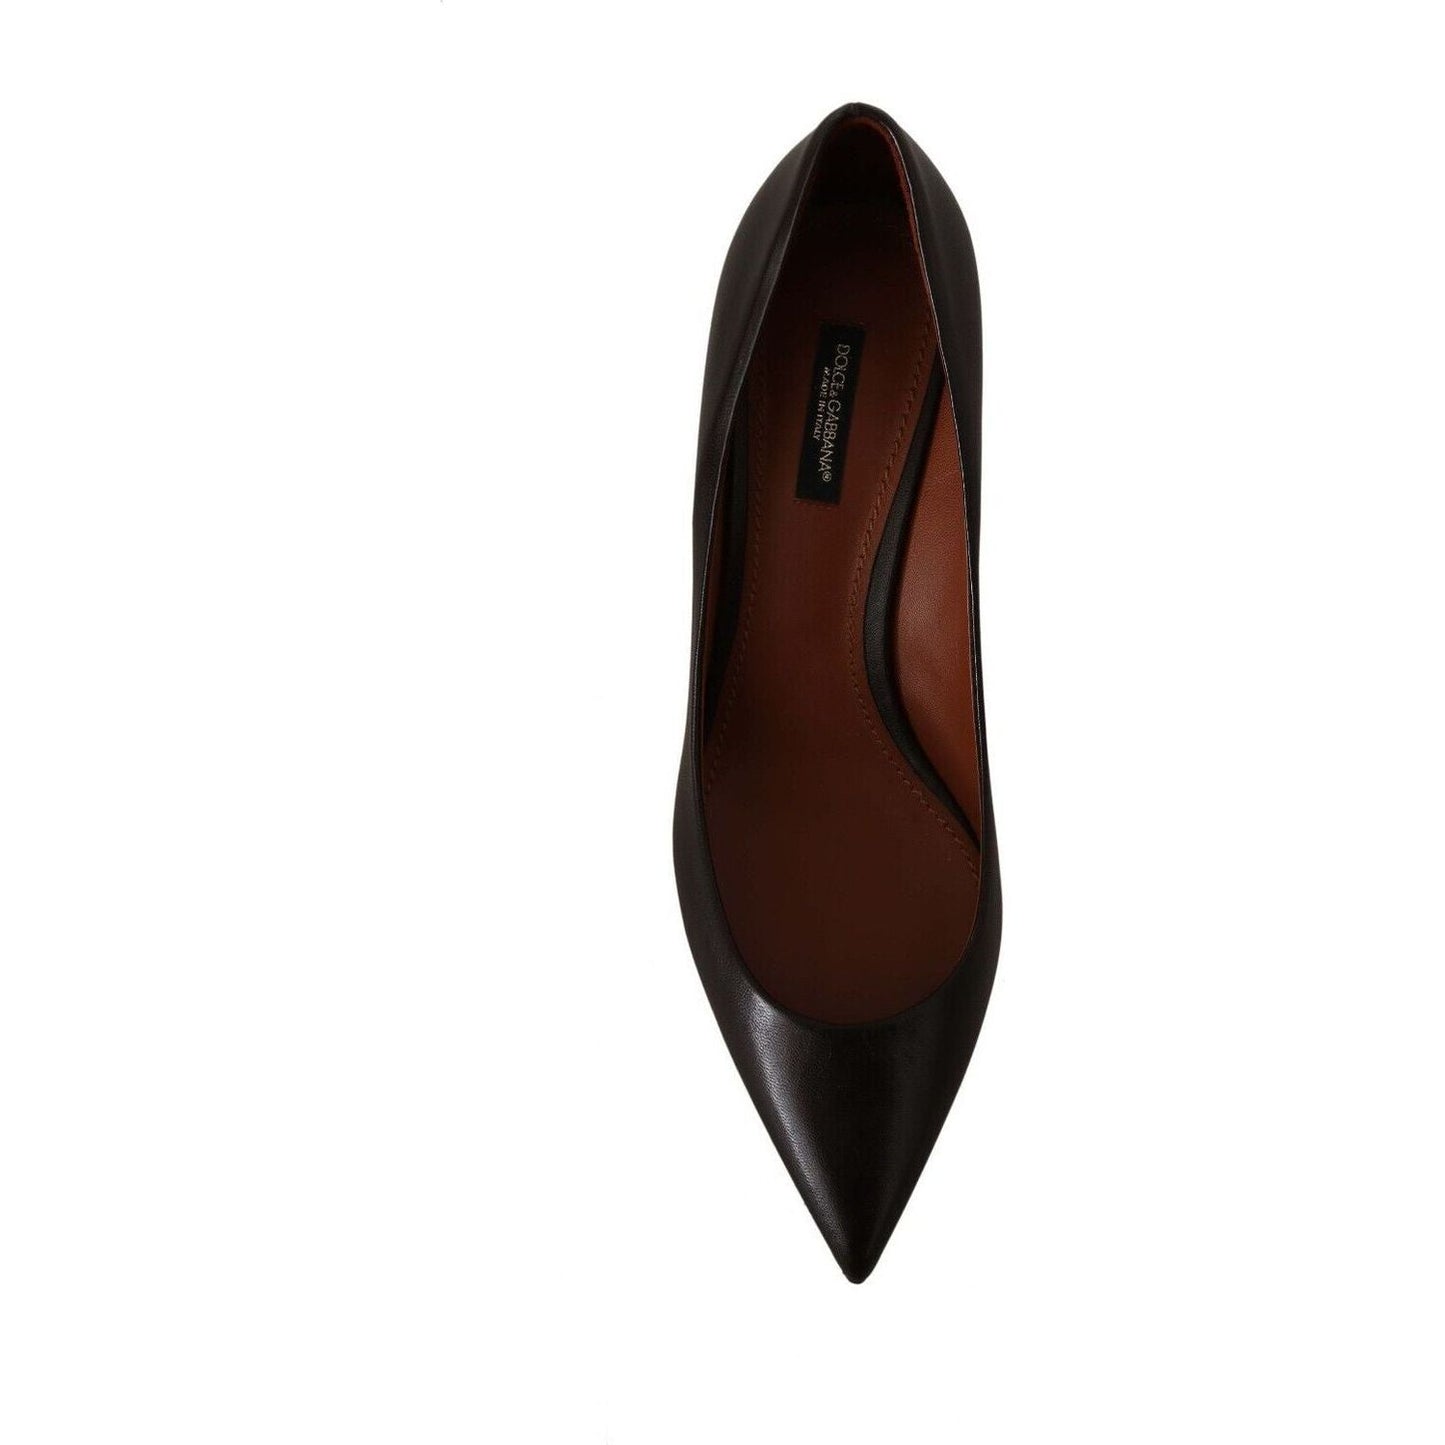 Dolce & Gabbana Elegant Brown Leather Heels Pumps brown-leather-kitten-mid-heels-pumps-shoes s-l1600-11-27-3aa556be-305.jpg